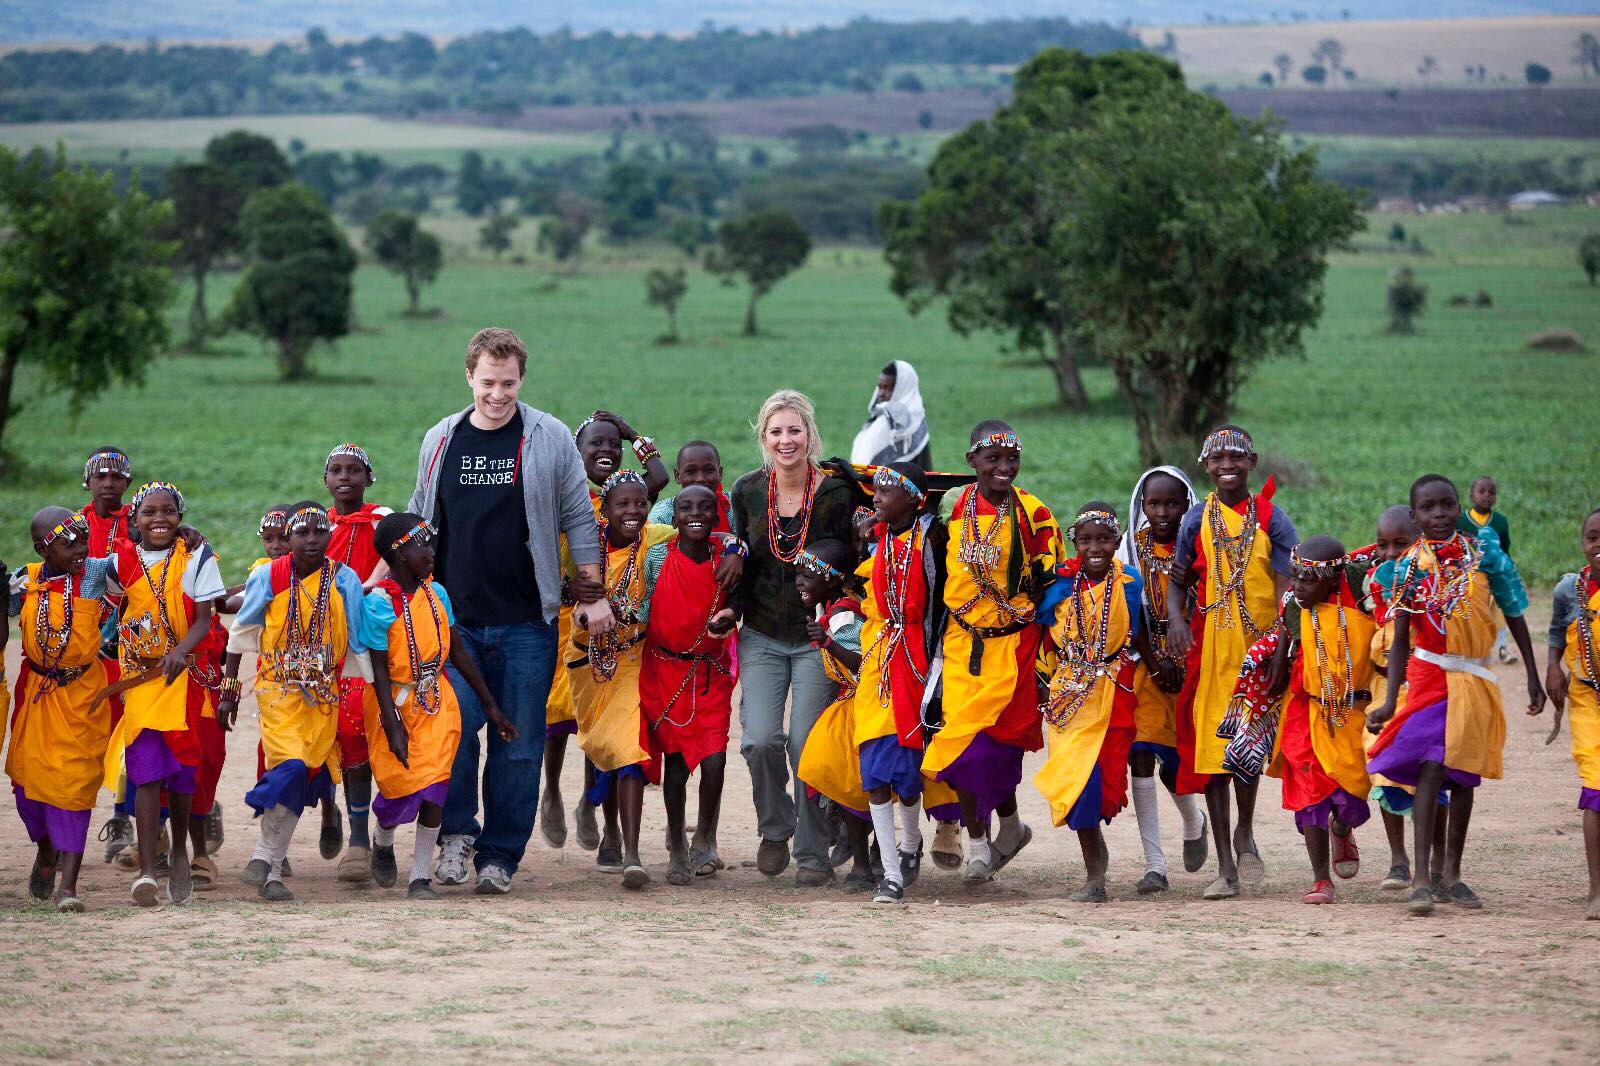 Holly Branson in Kenya walking with children from the Maasai Mara